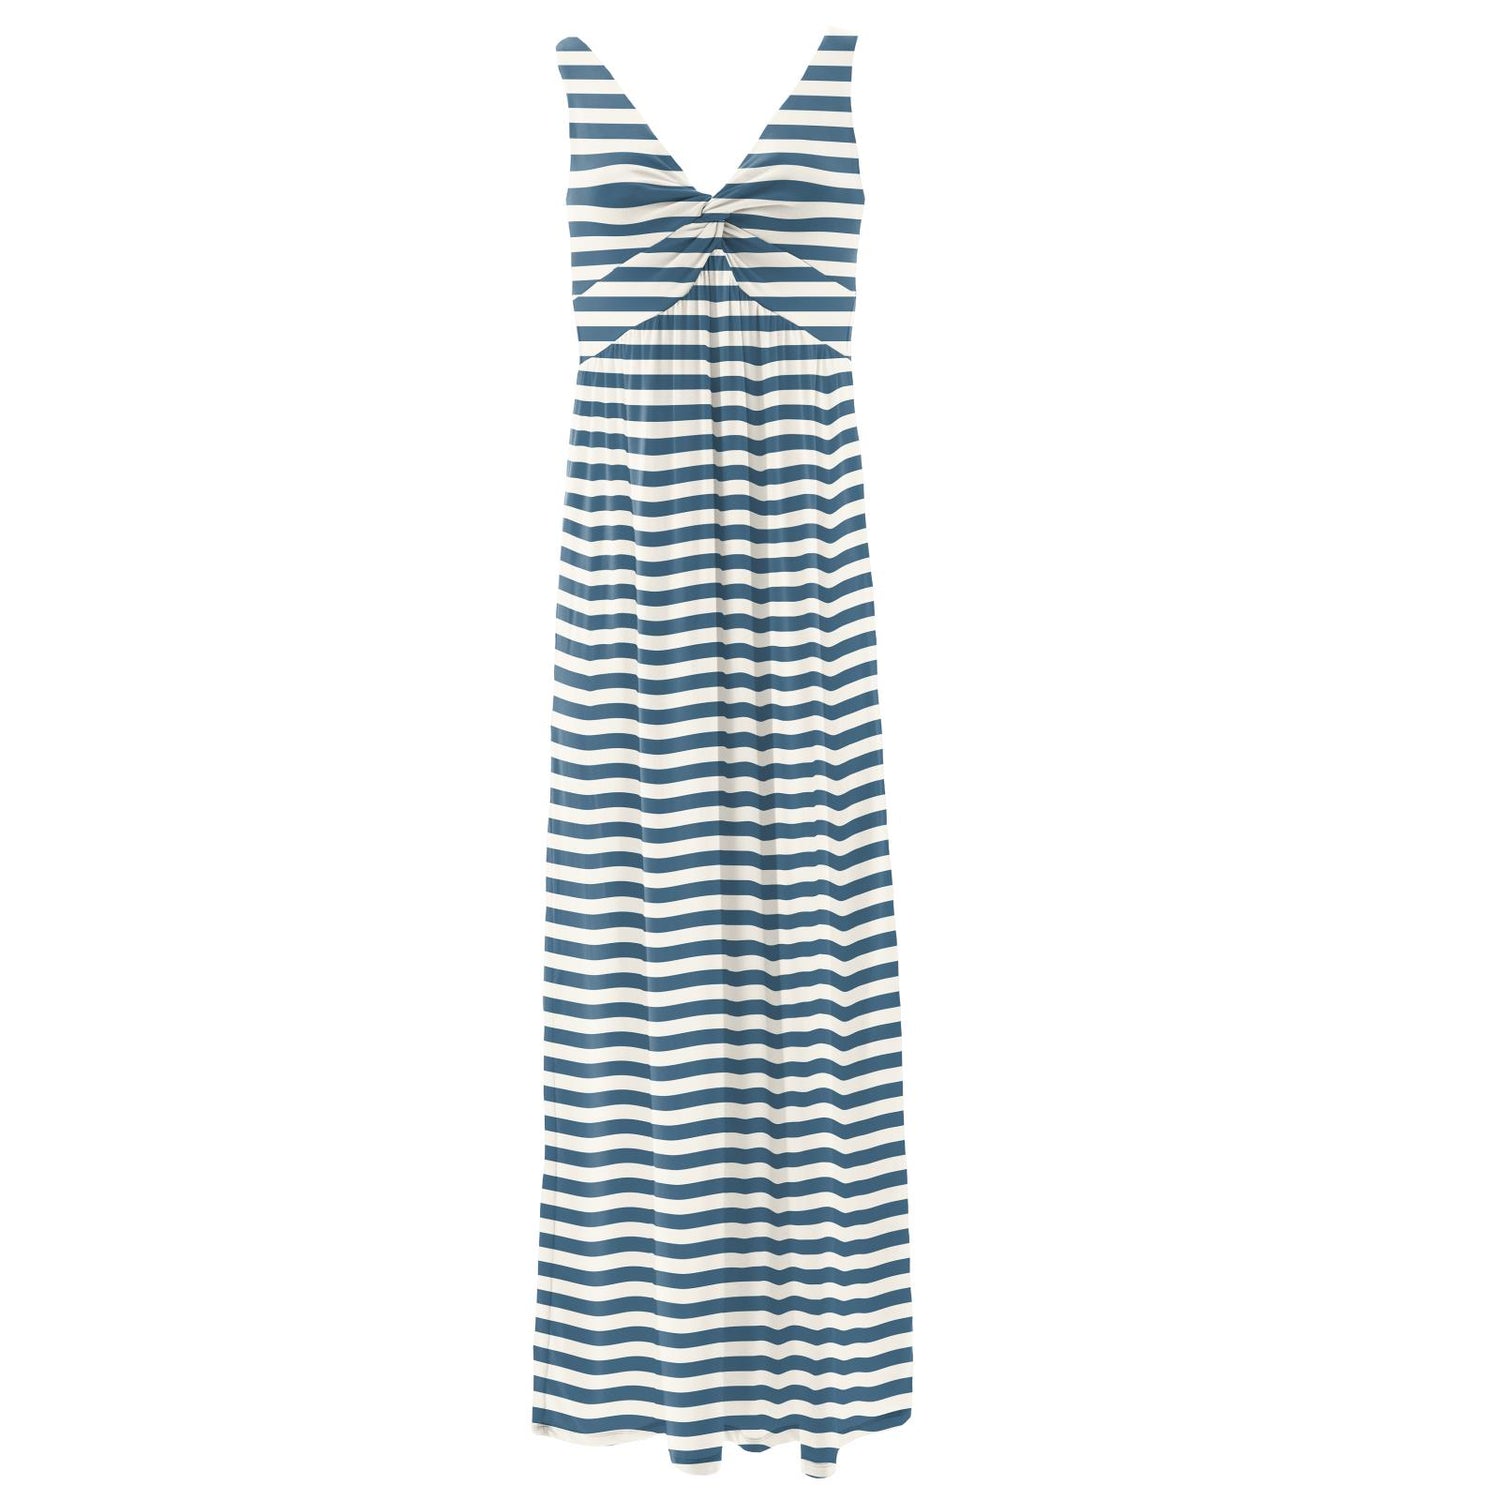 Women's Print Simple Twist Nightgown in Nautical Stripe